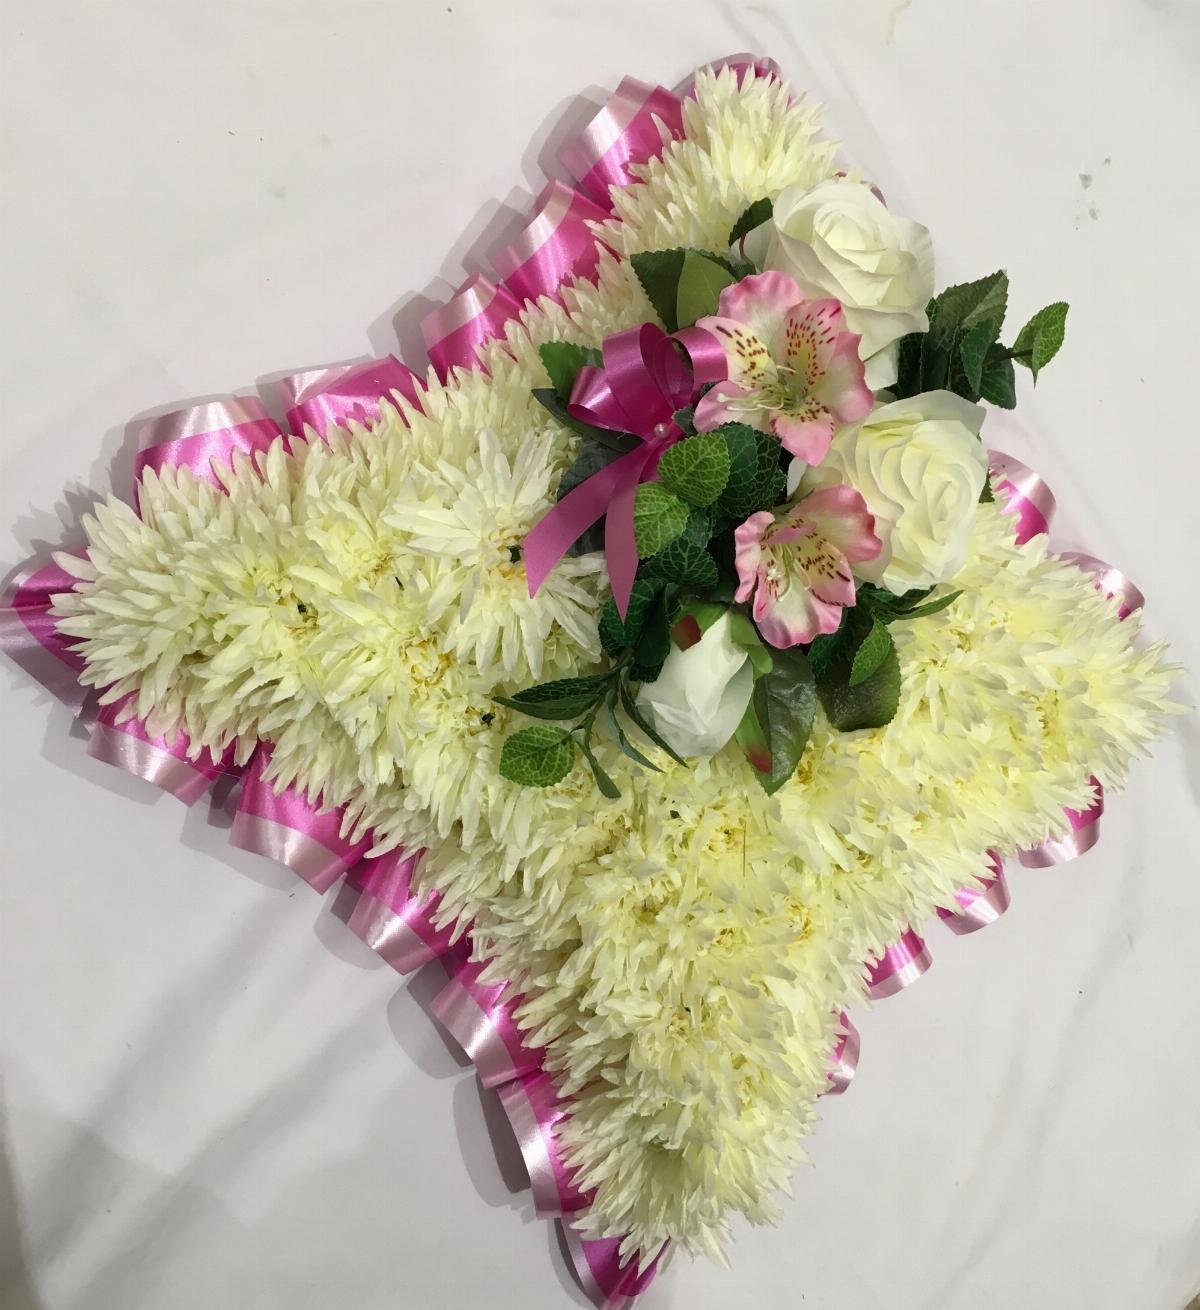 Chrysanthemum Cushion Funeral Tribute Double Ribbon Top View